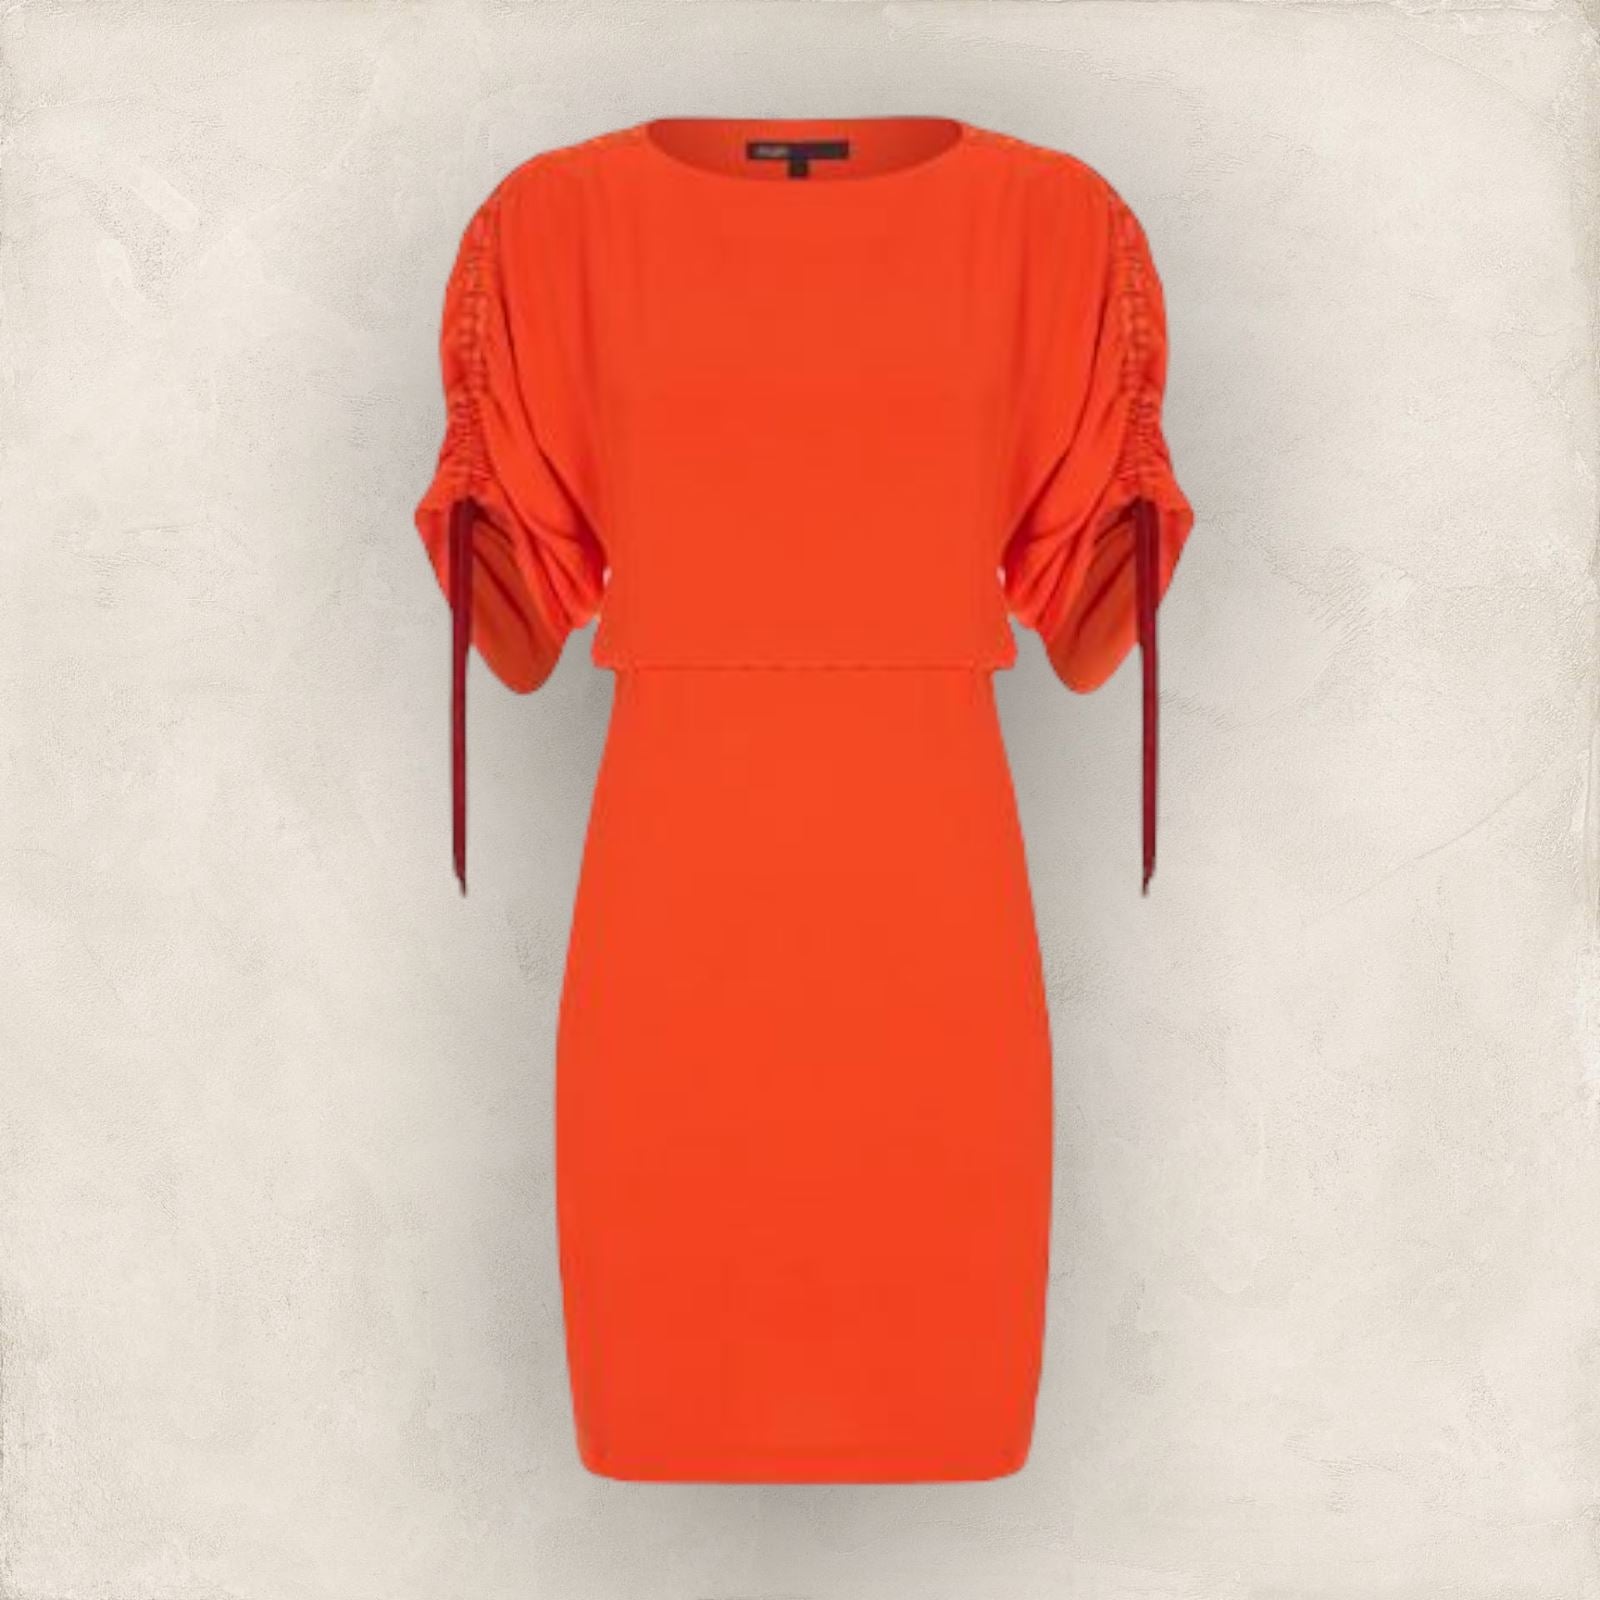 Maje Roan Coral Crepe Dress Size 2 UK 10 US 6 EU 38 IT 42 BNWT RRP £289 Timeless Fashions